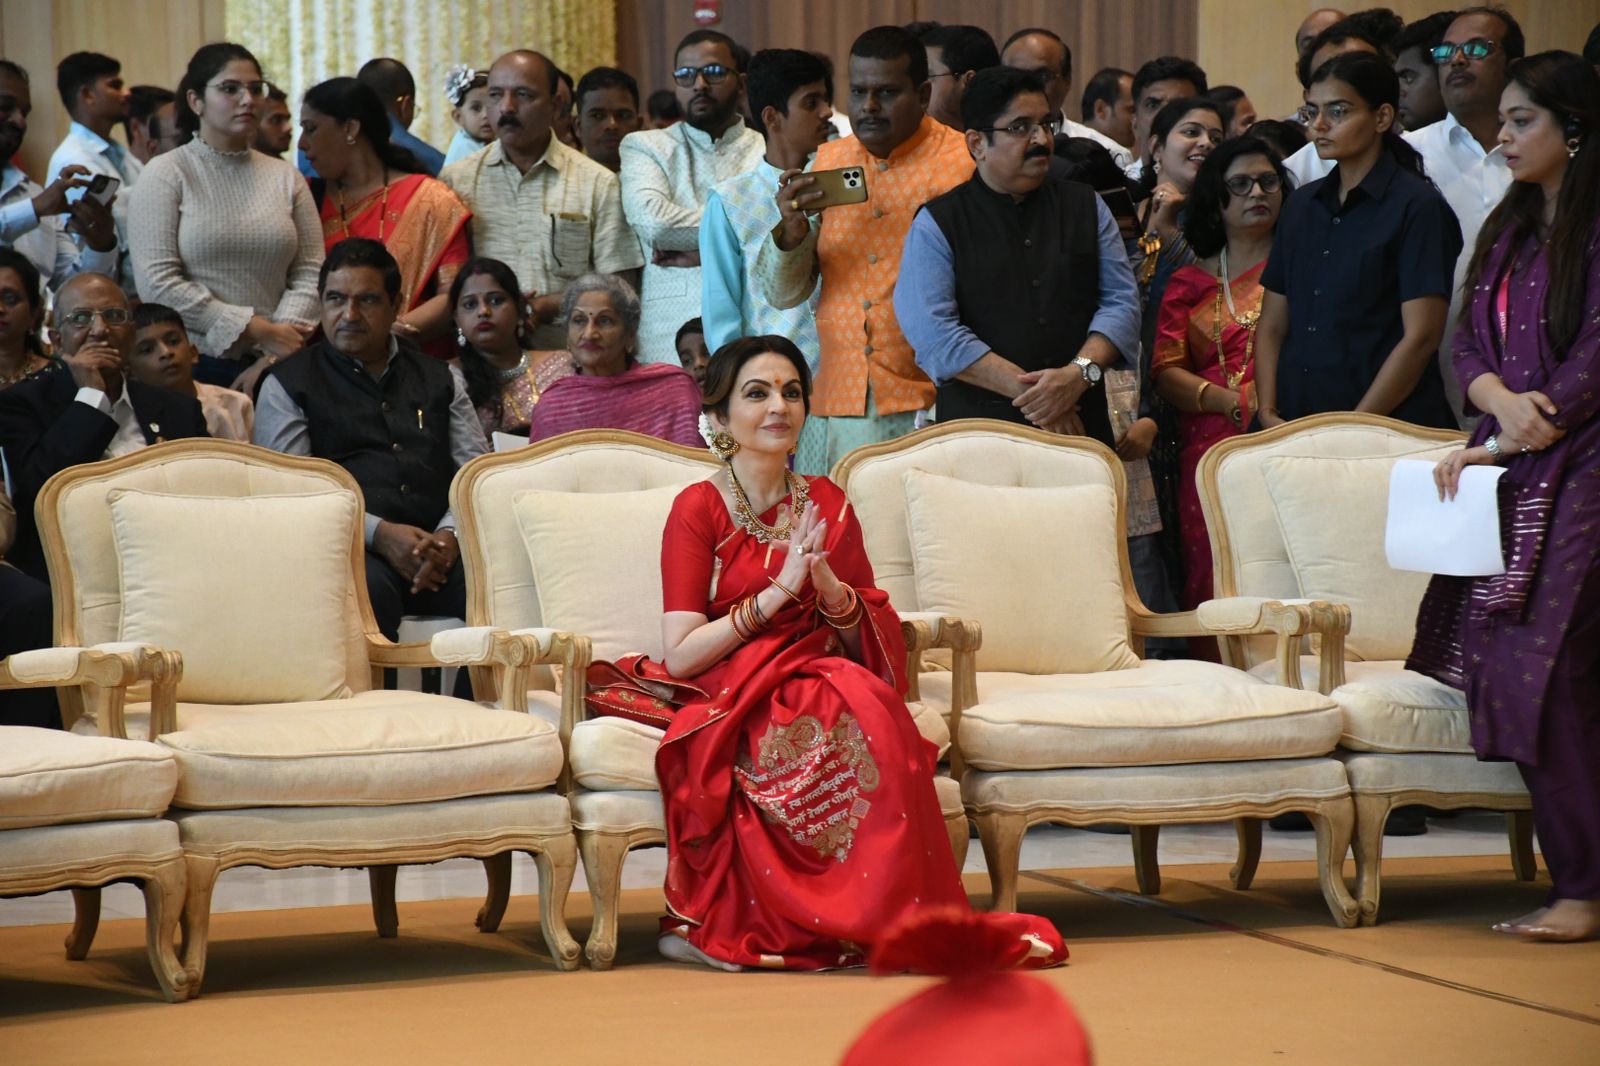 Nita Ambani wore a beautiful red saree with gayatri mantra embroidery 